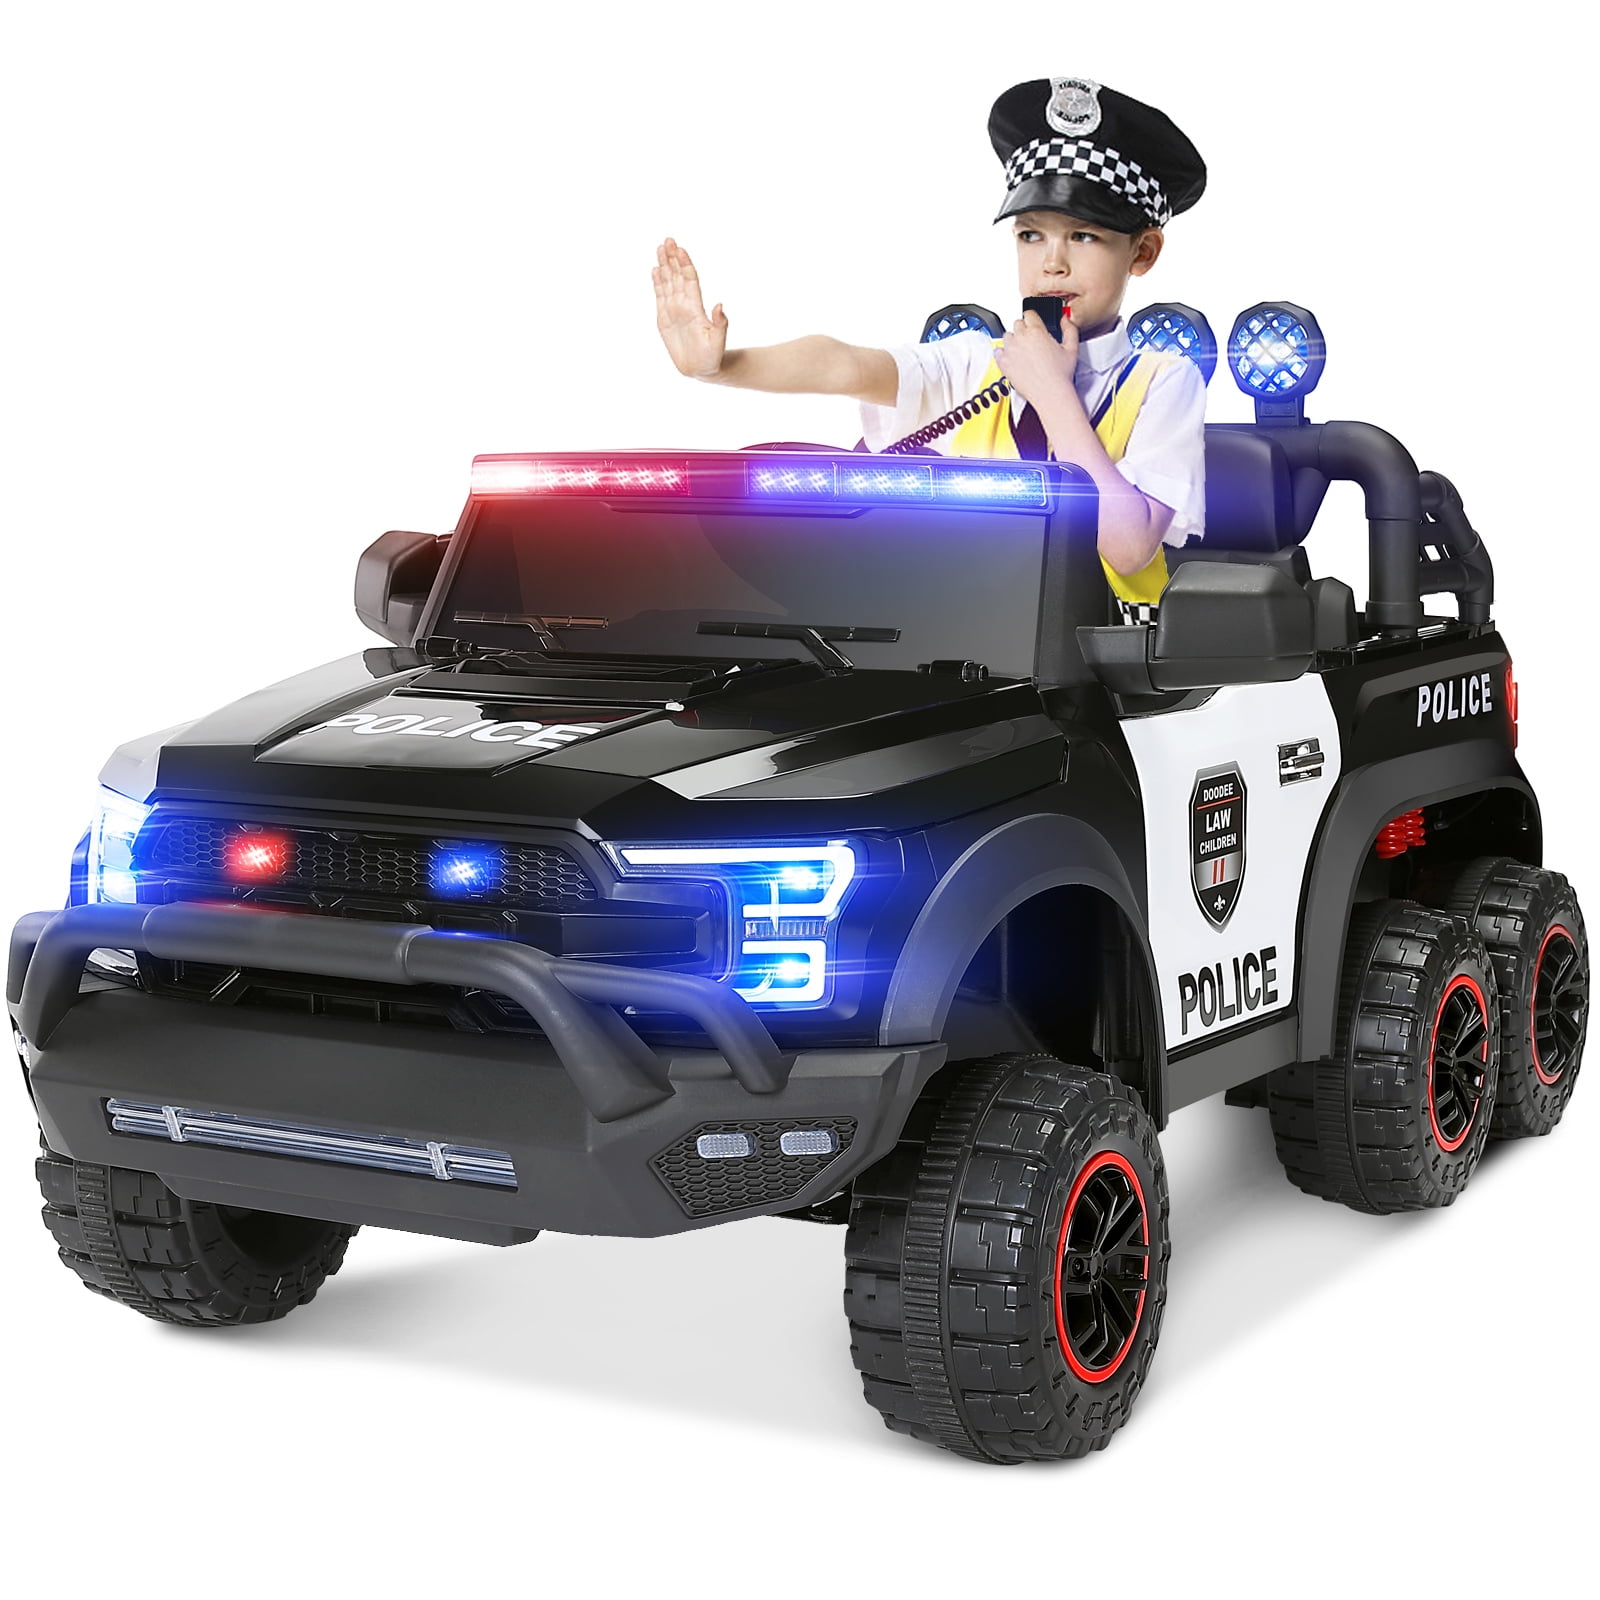 JOYLDIAS 6 Wheels 12V Kids Ride on Police Car Toy with Remote Control (Black)